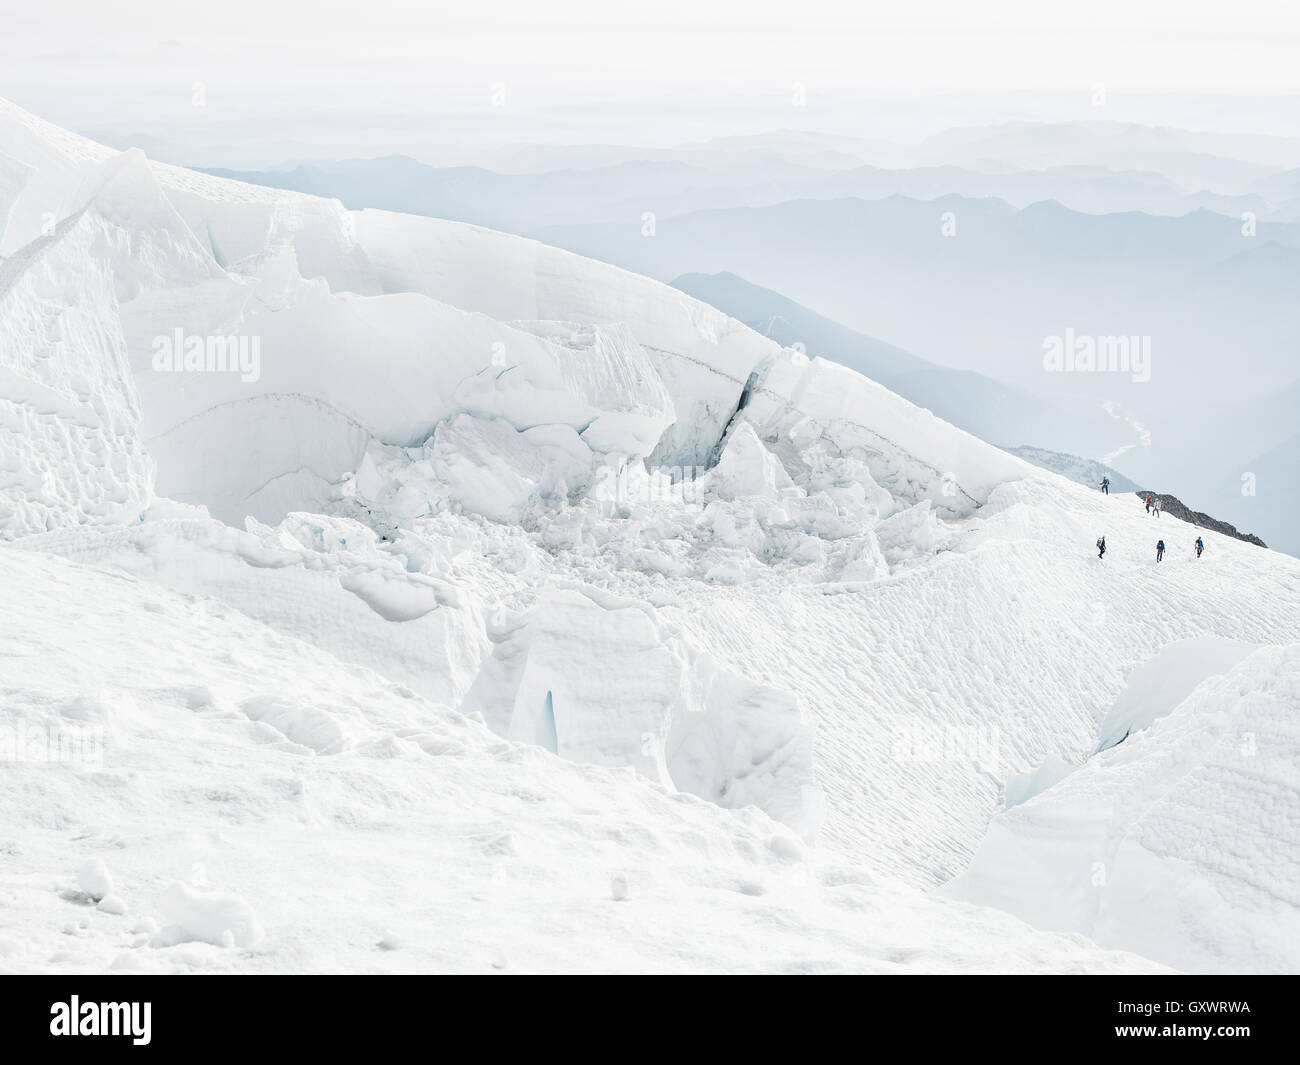 Trekkers make their way across the frozen earth on the journey Mt. Rainier's peak Stock Photo